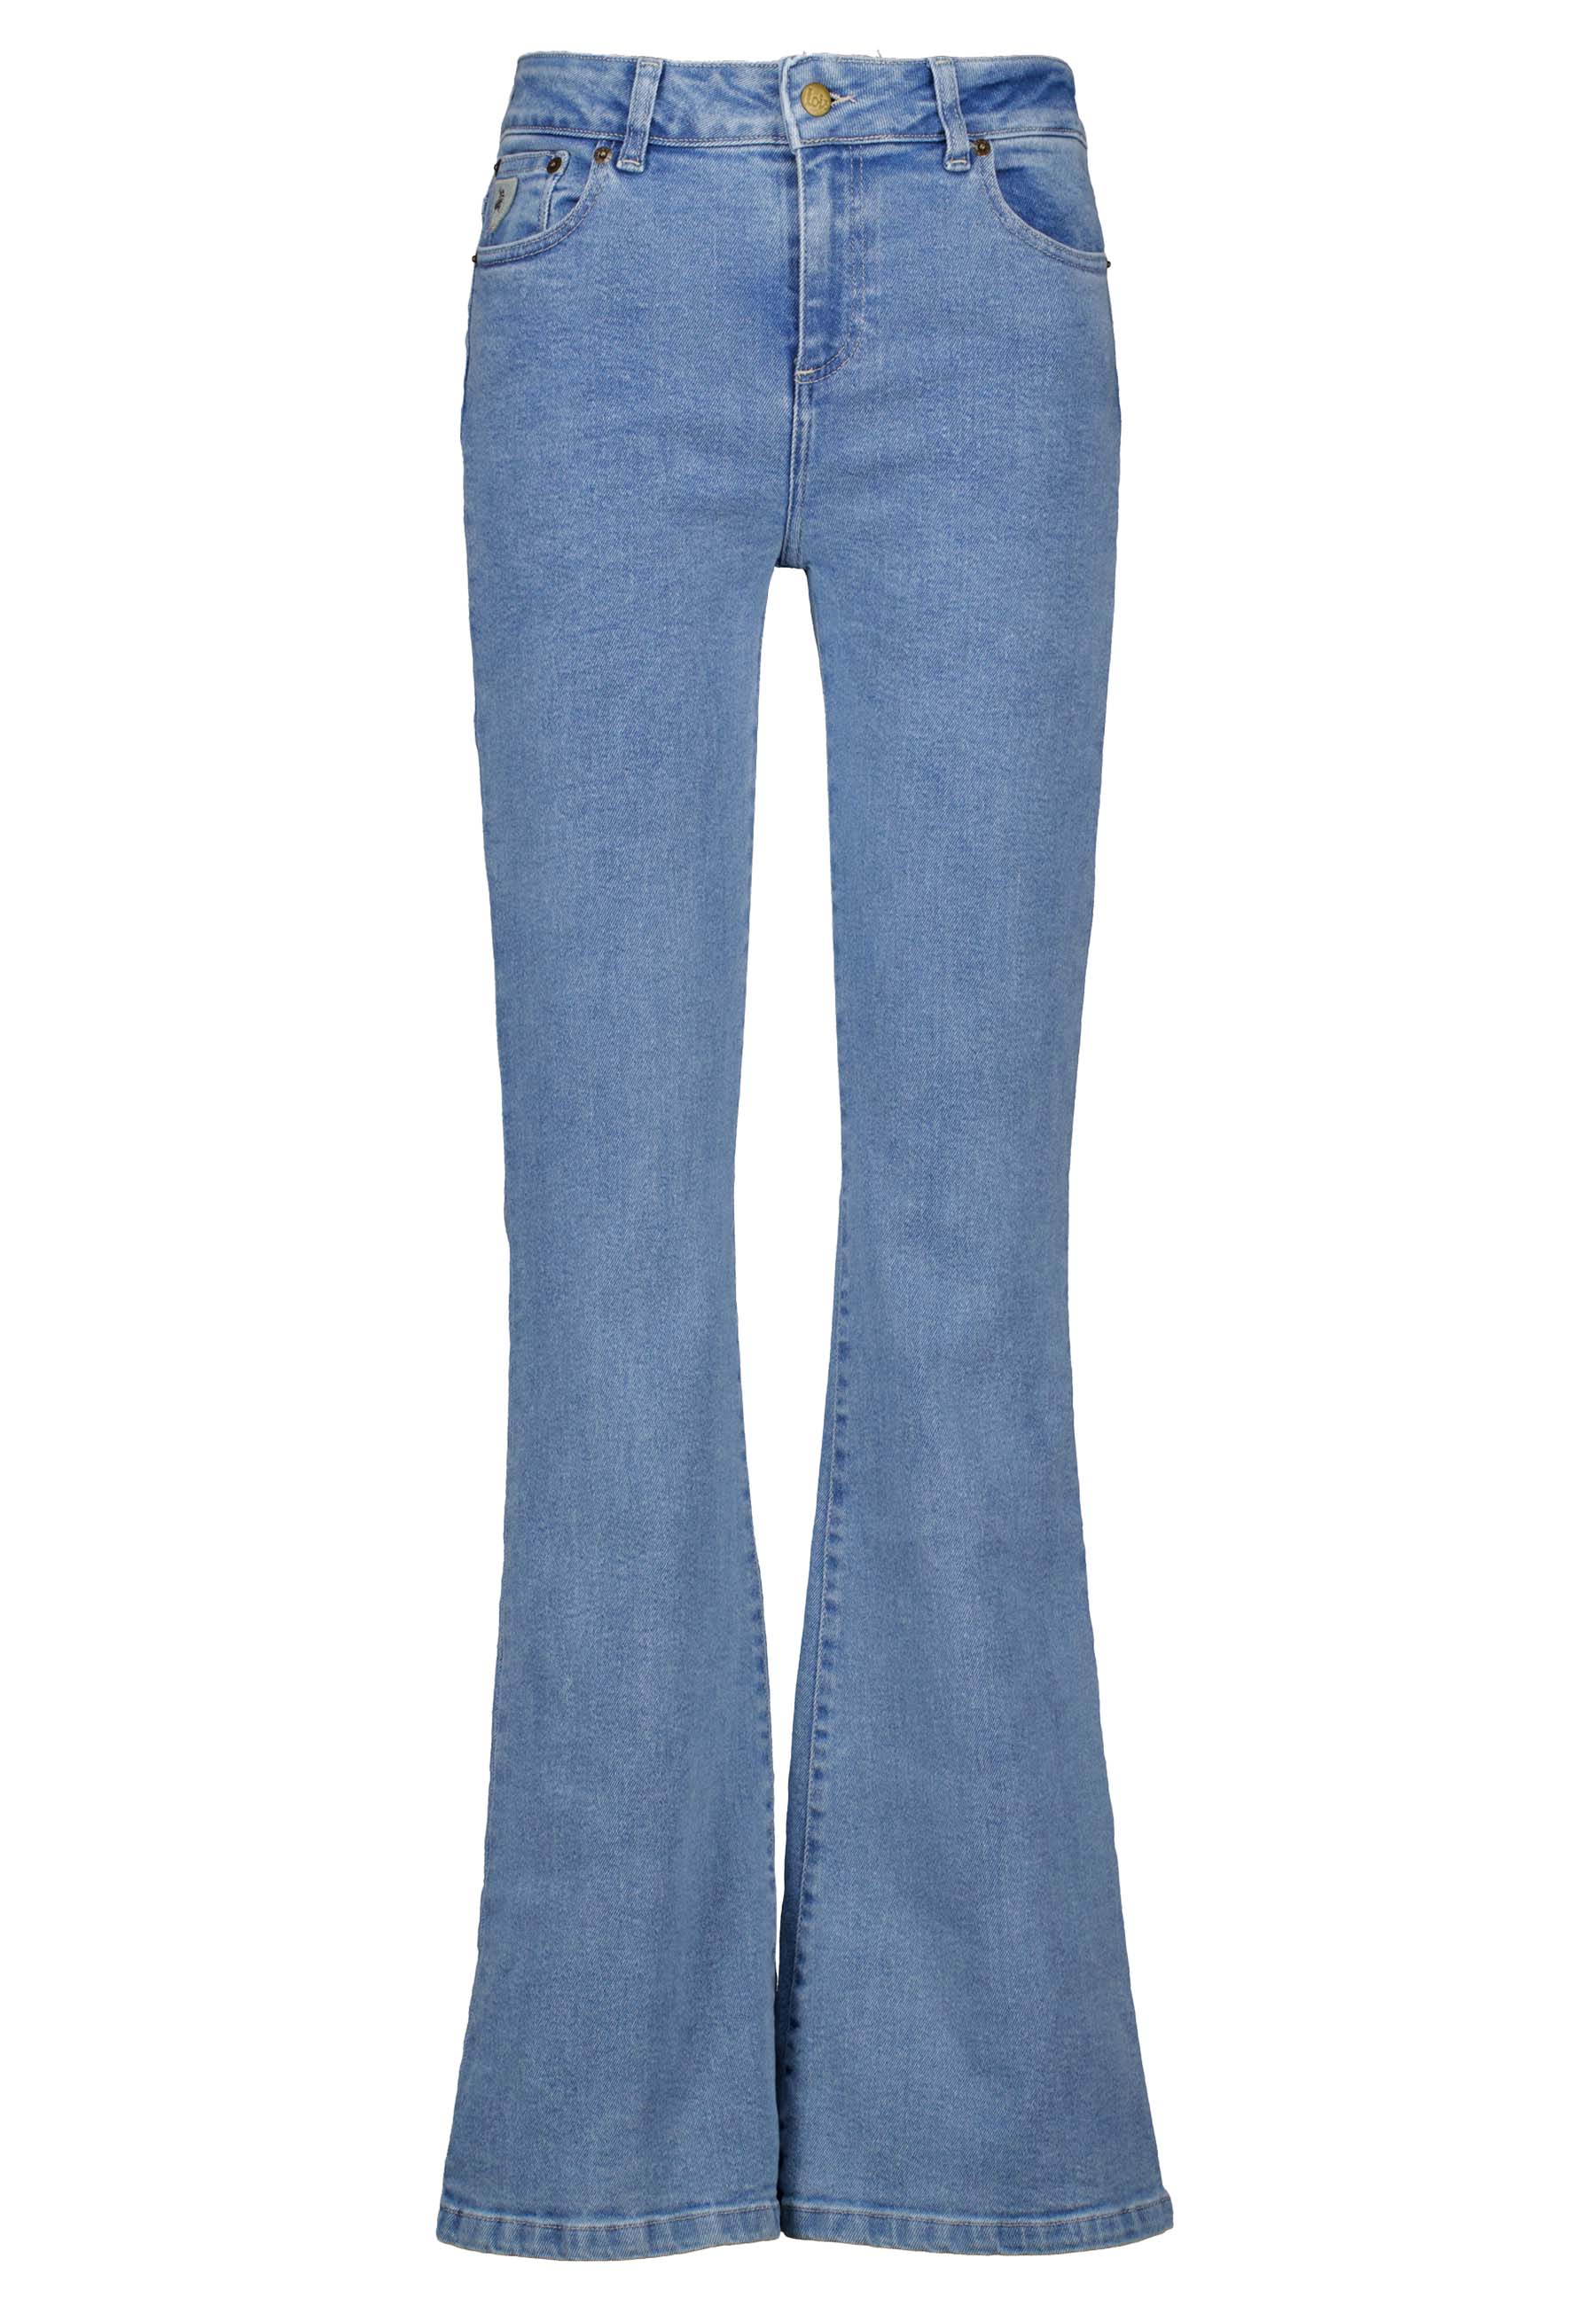 Lois jeans blauw Dames maat 27/34